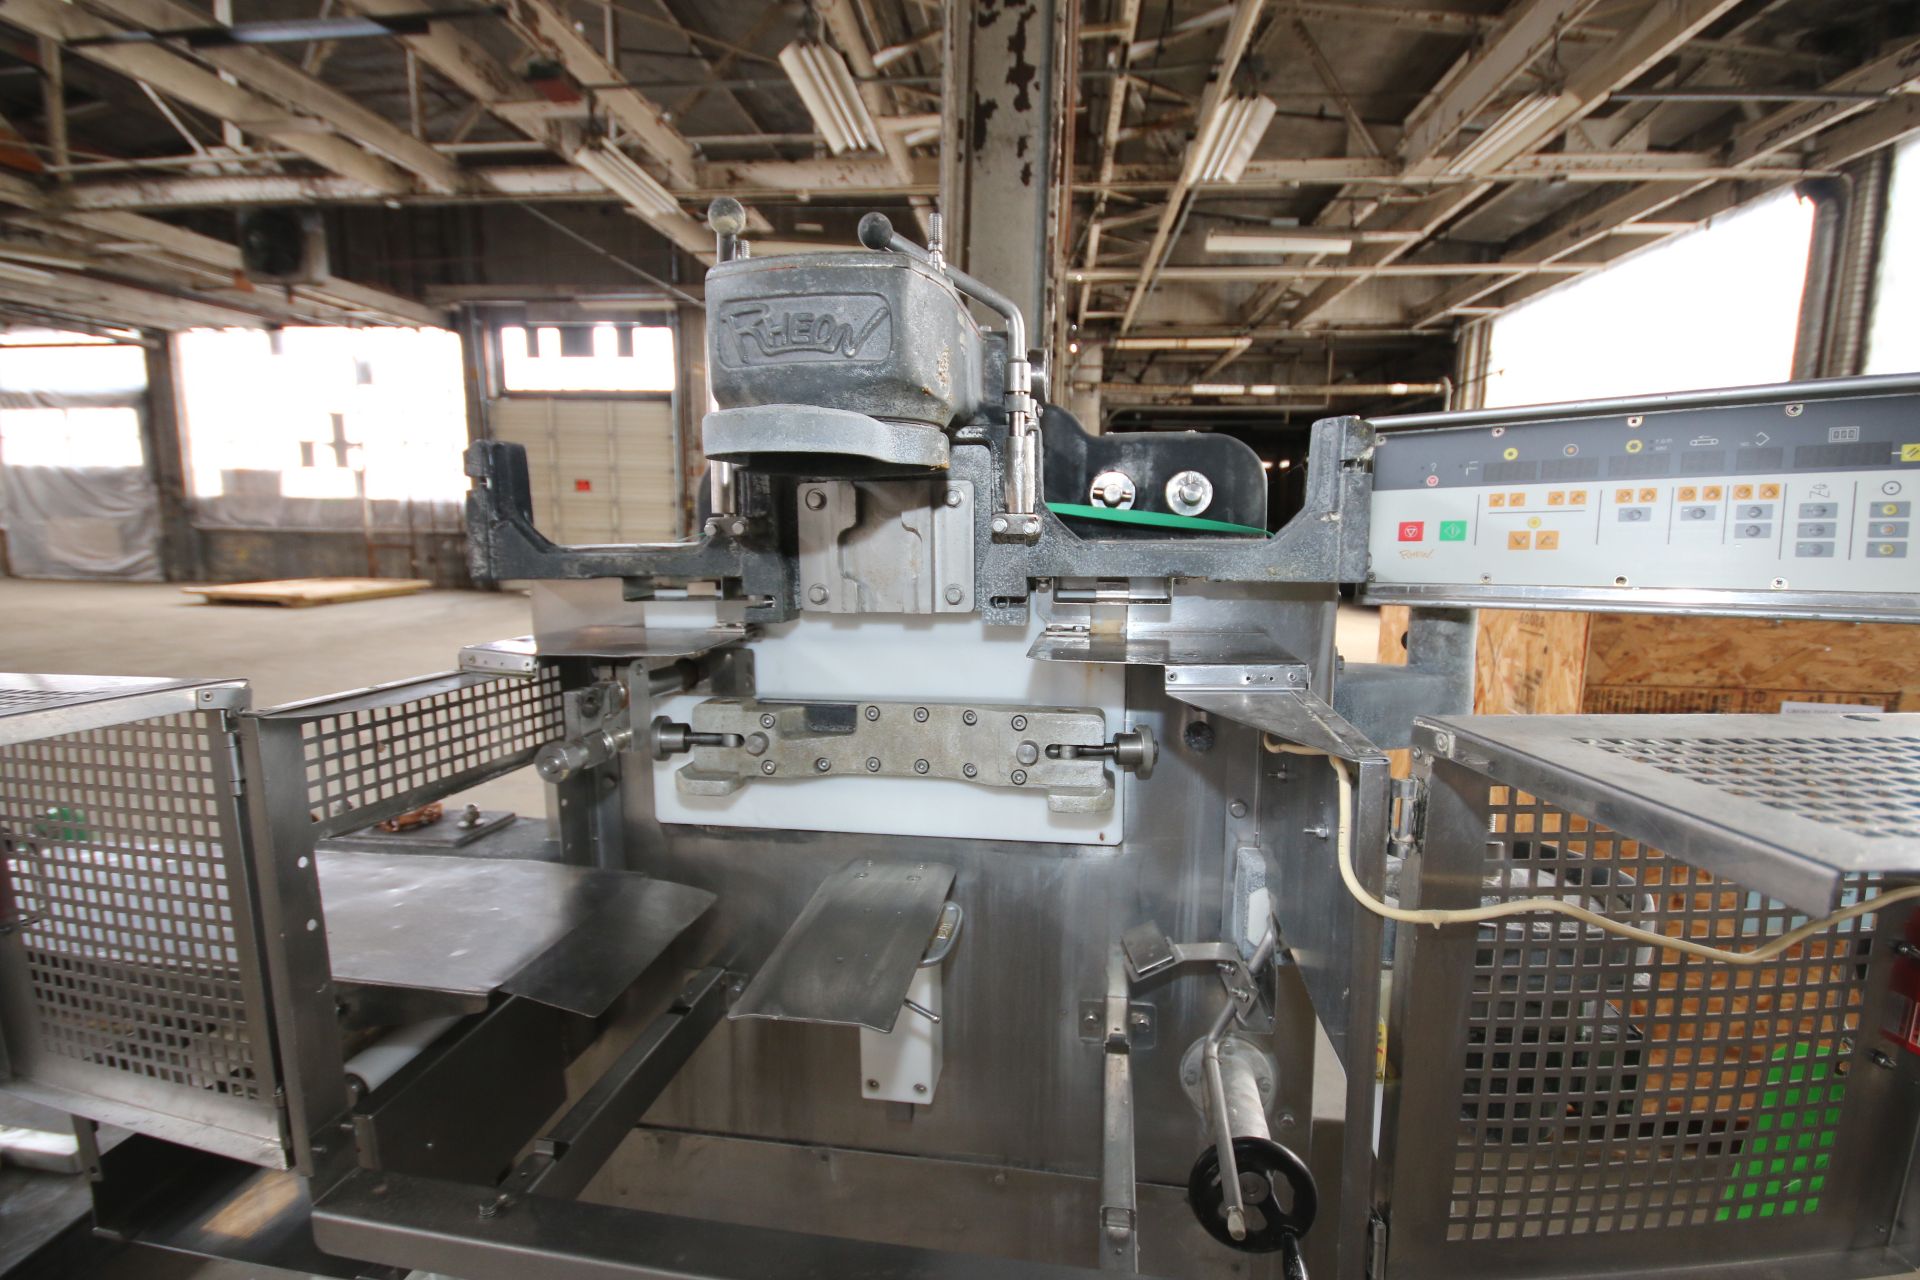 Rheon Encrusting Machine, Model Cornucopia KN400, S/N 0990708 with Mitsubishi E500 VFD,  Touchpad - Image 2 of 6